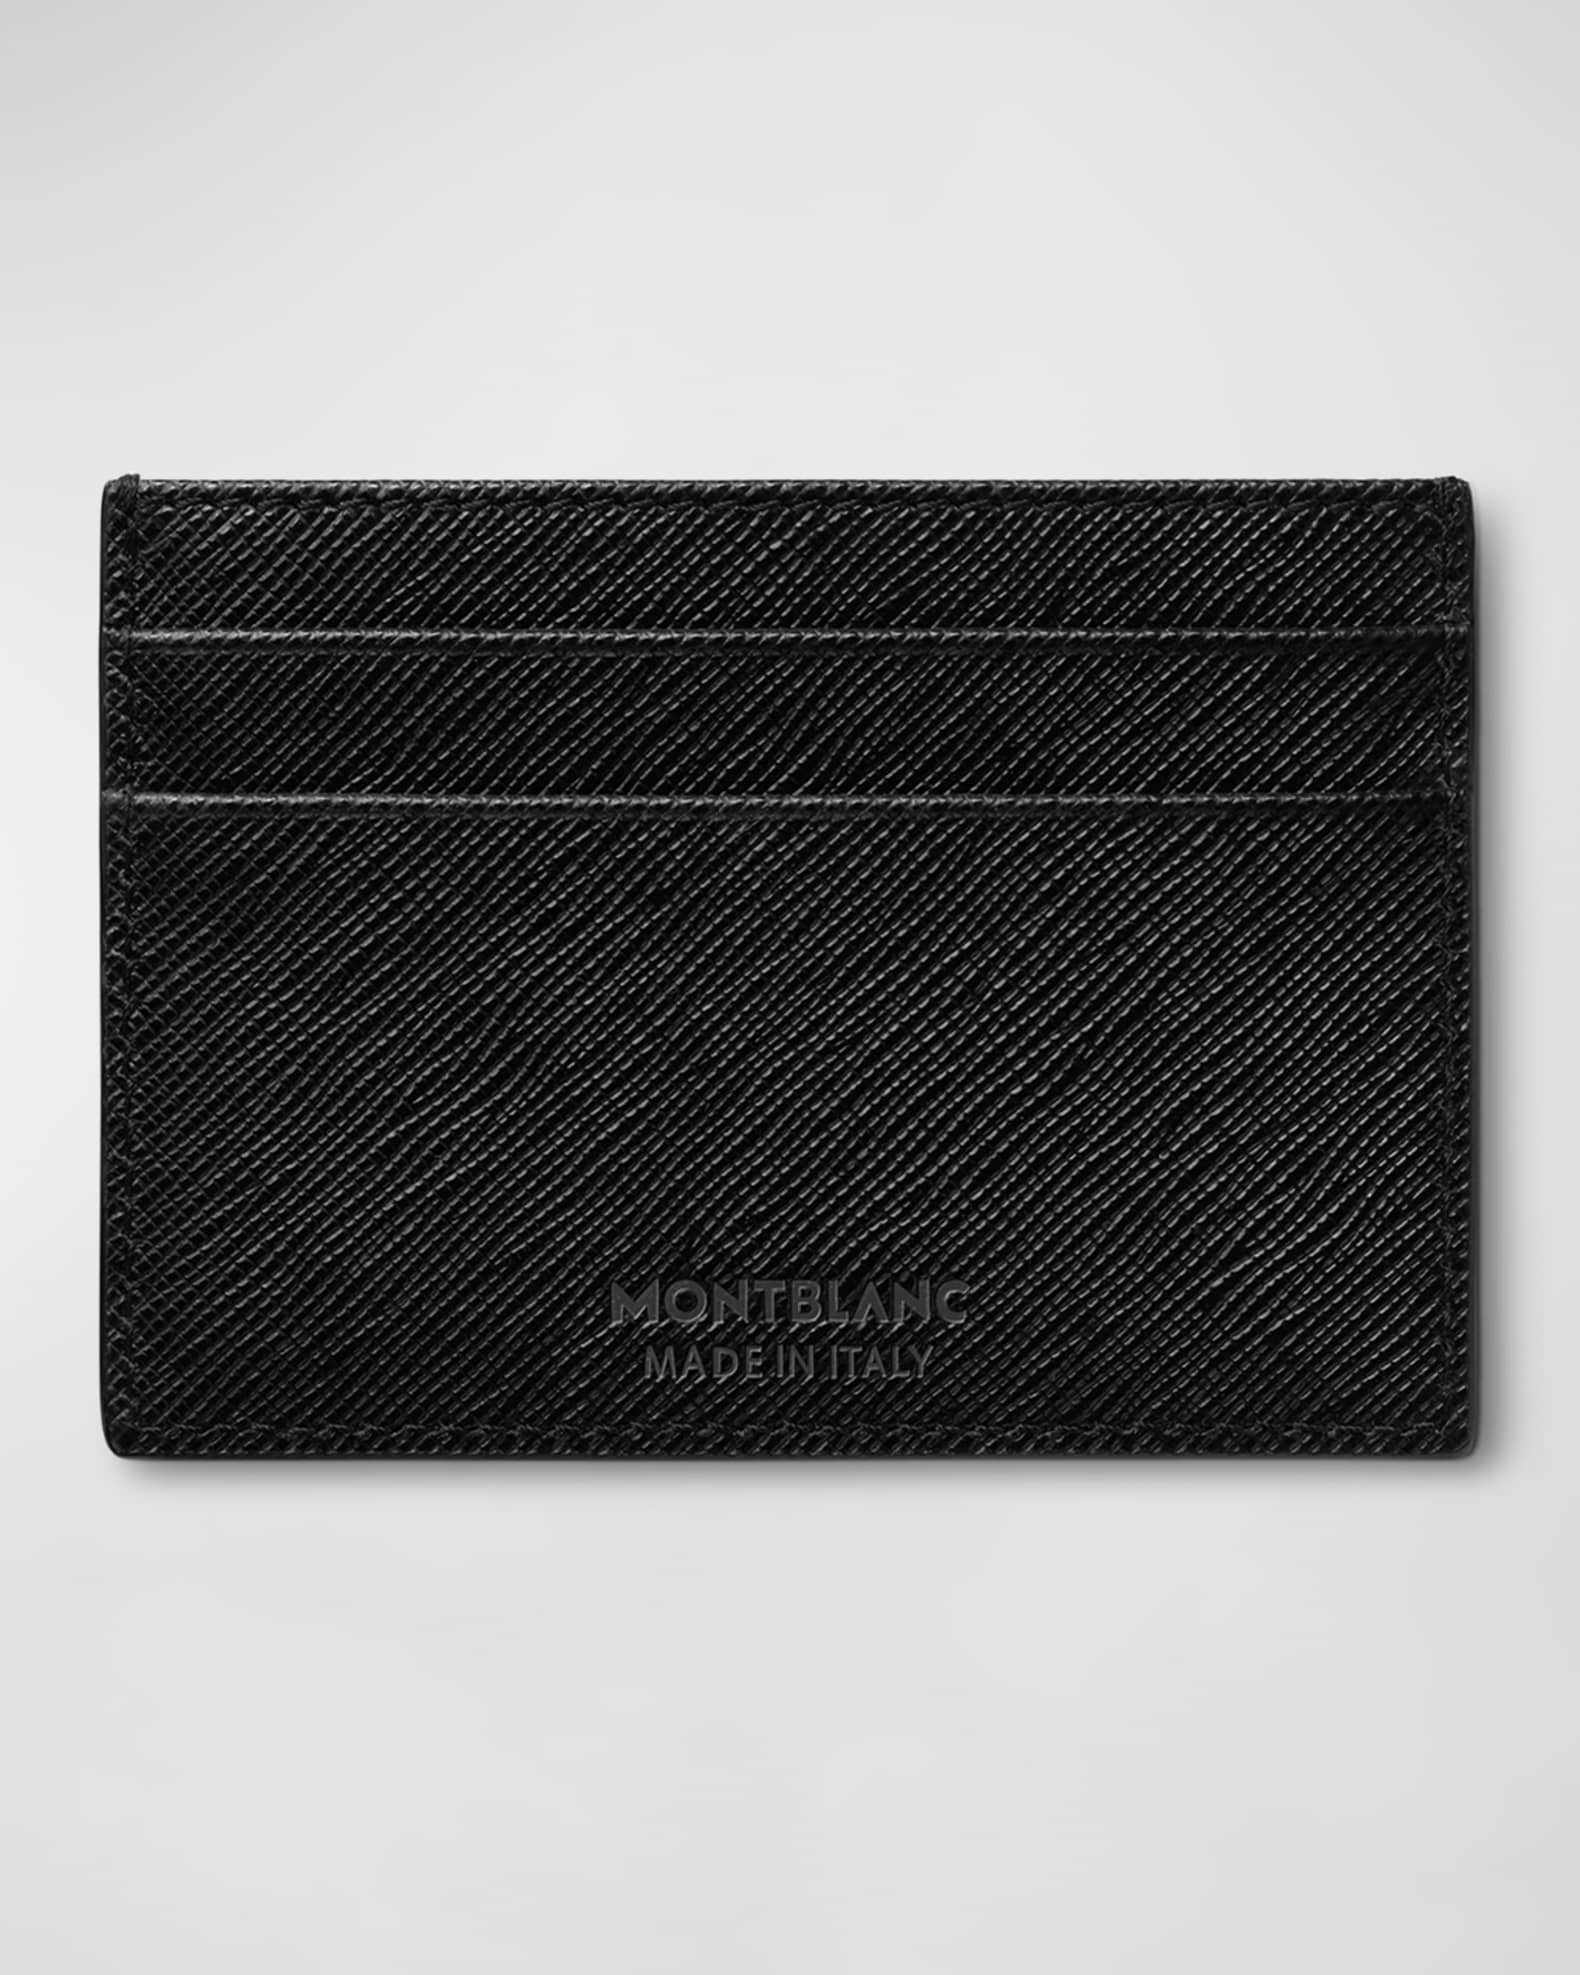 Montblanc Men's Sartorial Leather Card Holder